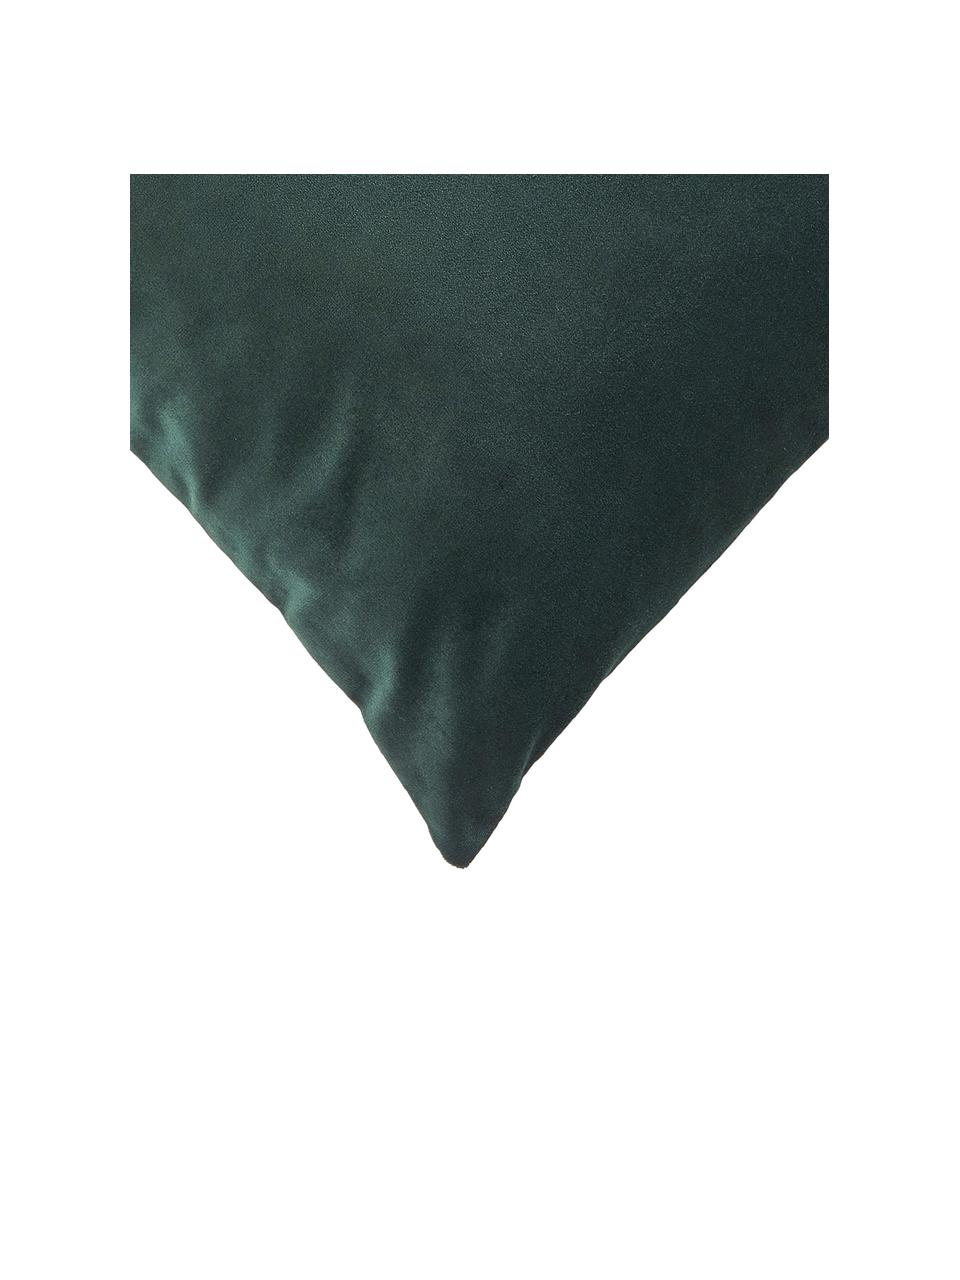 Samt-Kissenhüllen Rush, 2 Stück, 100 % Polyester (recycled), Dunkelgrün, B 45 x L 45 cm